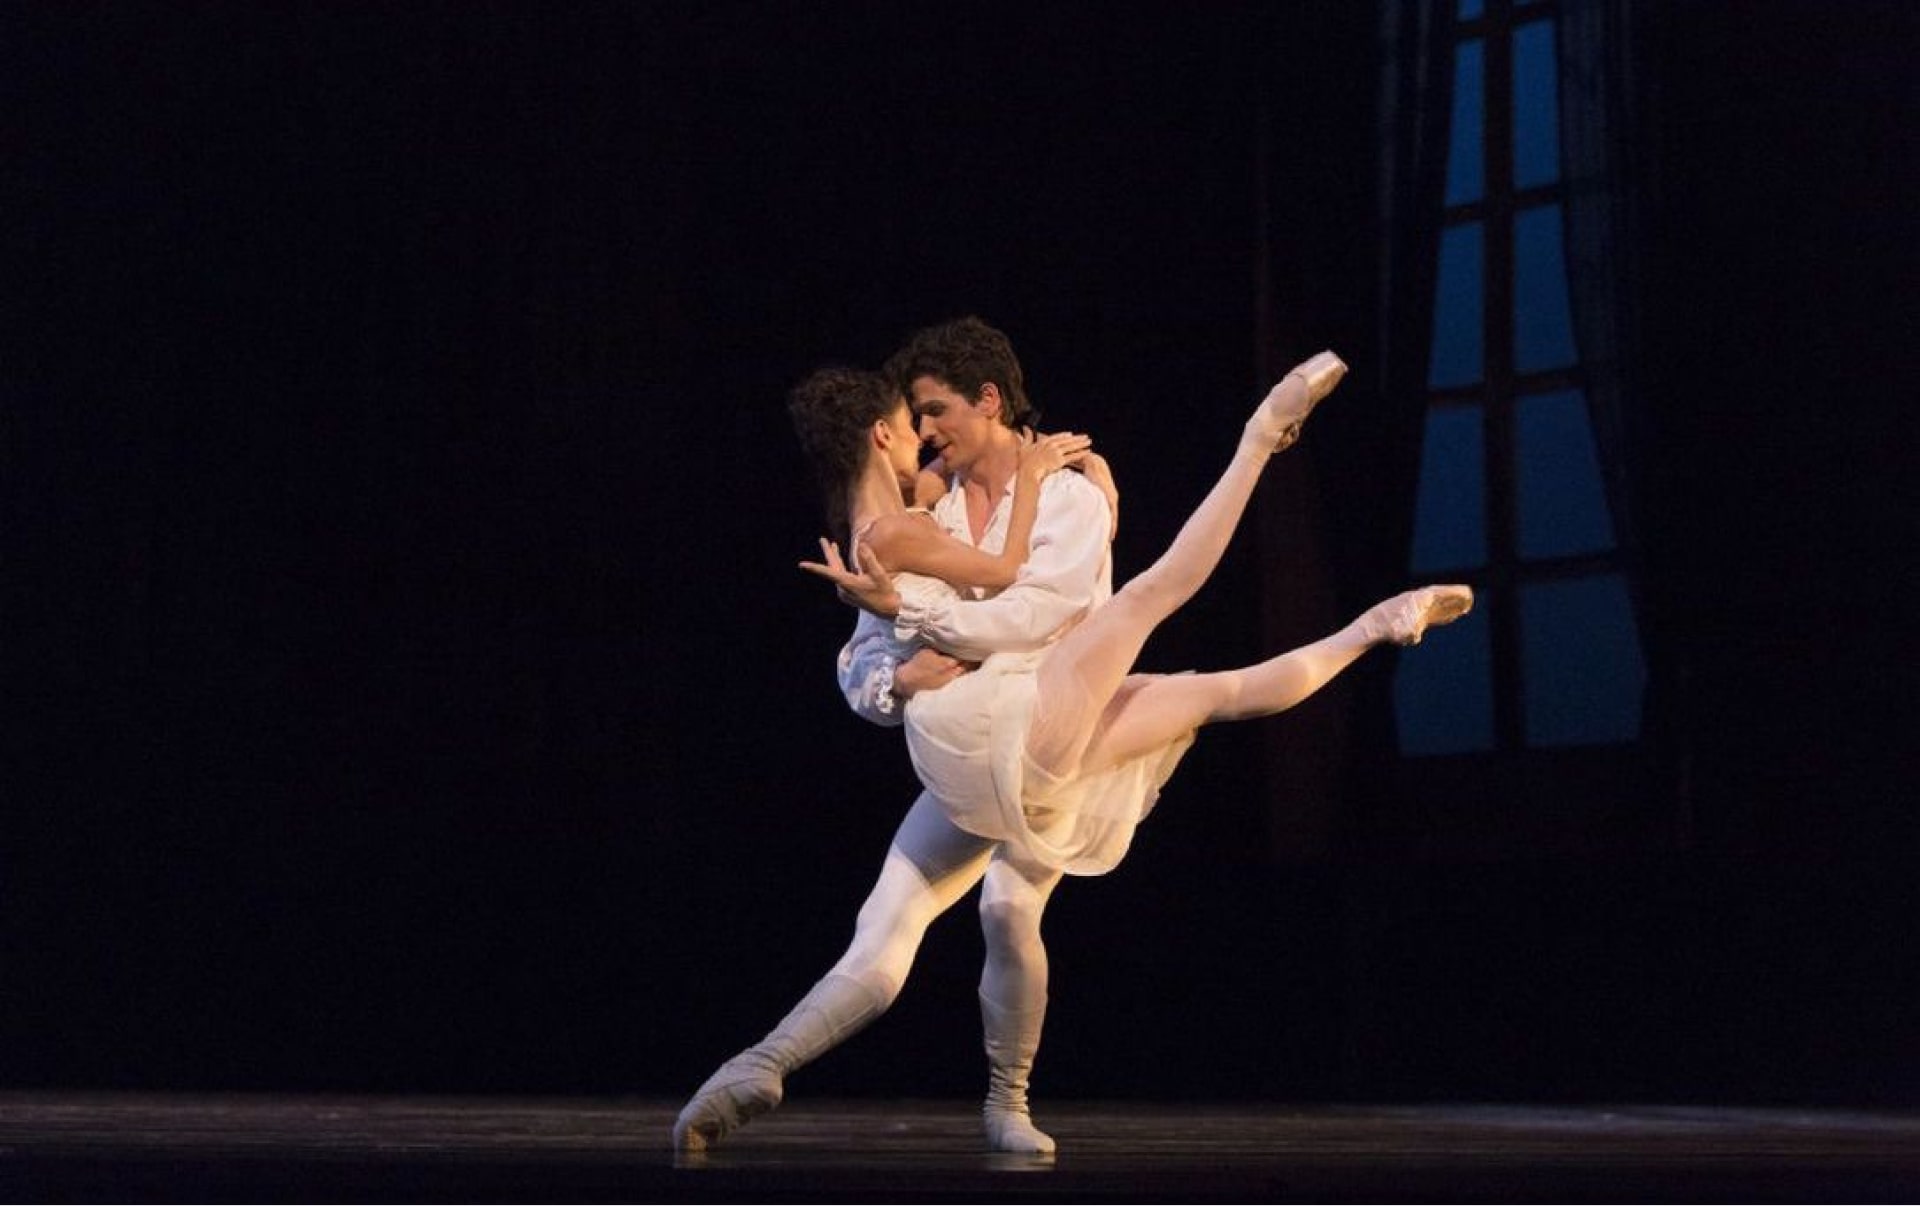 Dancer in white holds ballerina in raised embrace in front of moonlit paned window.